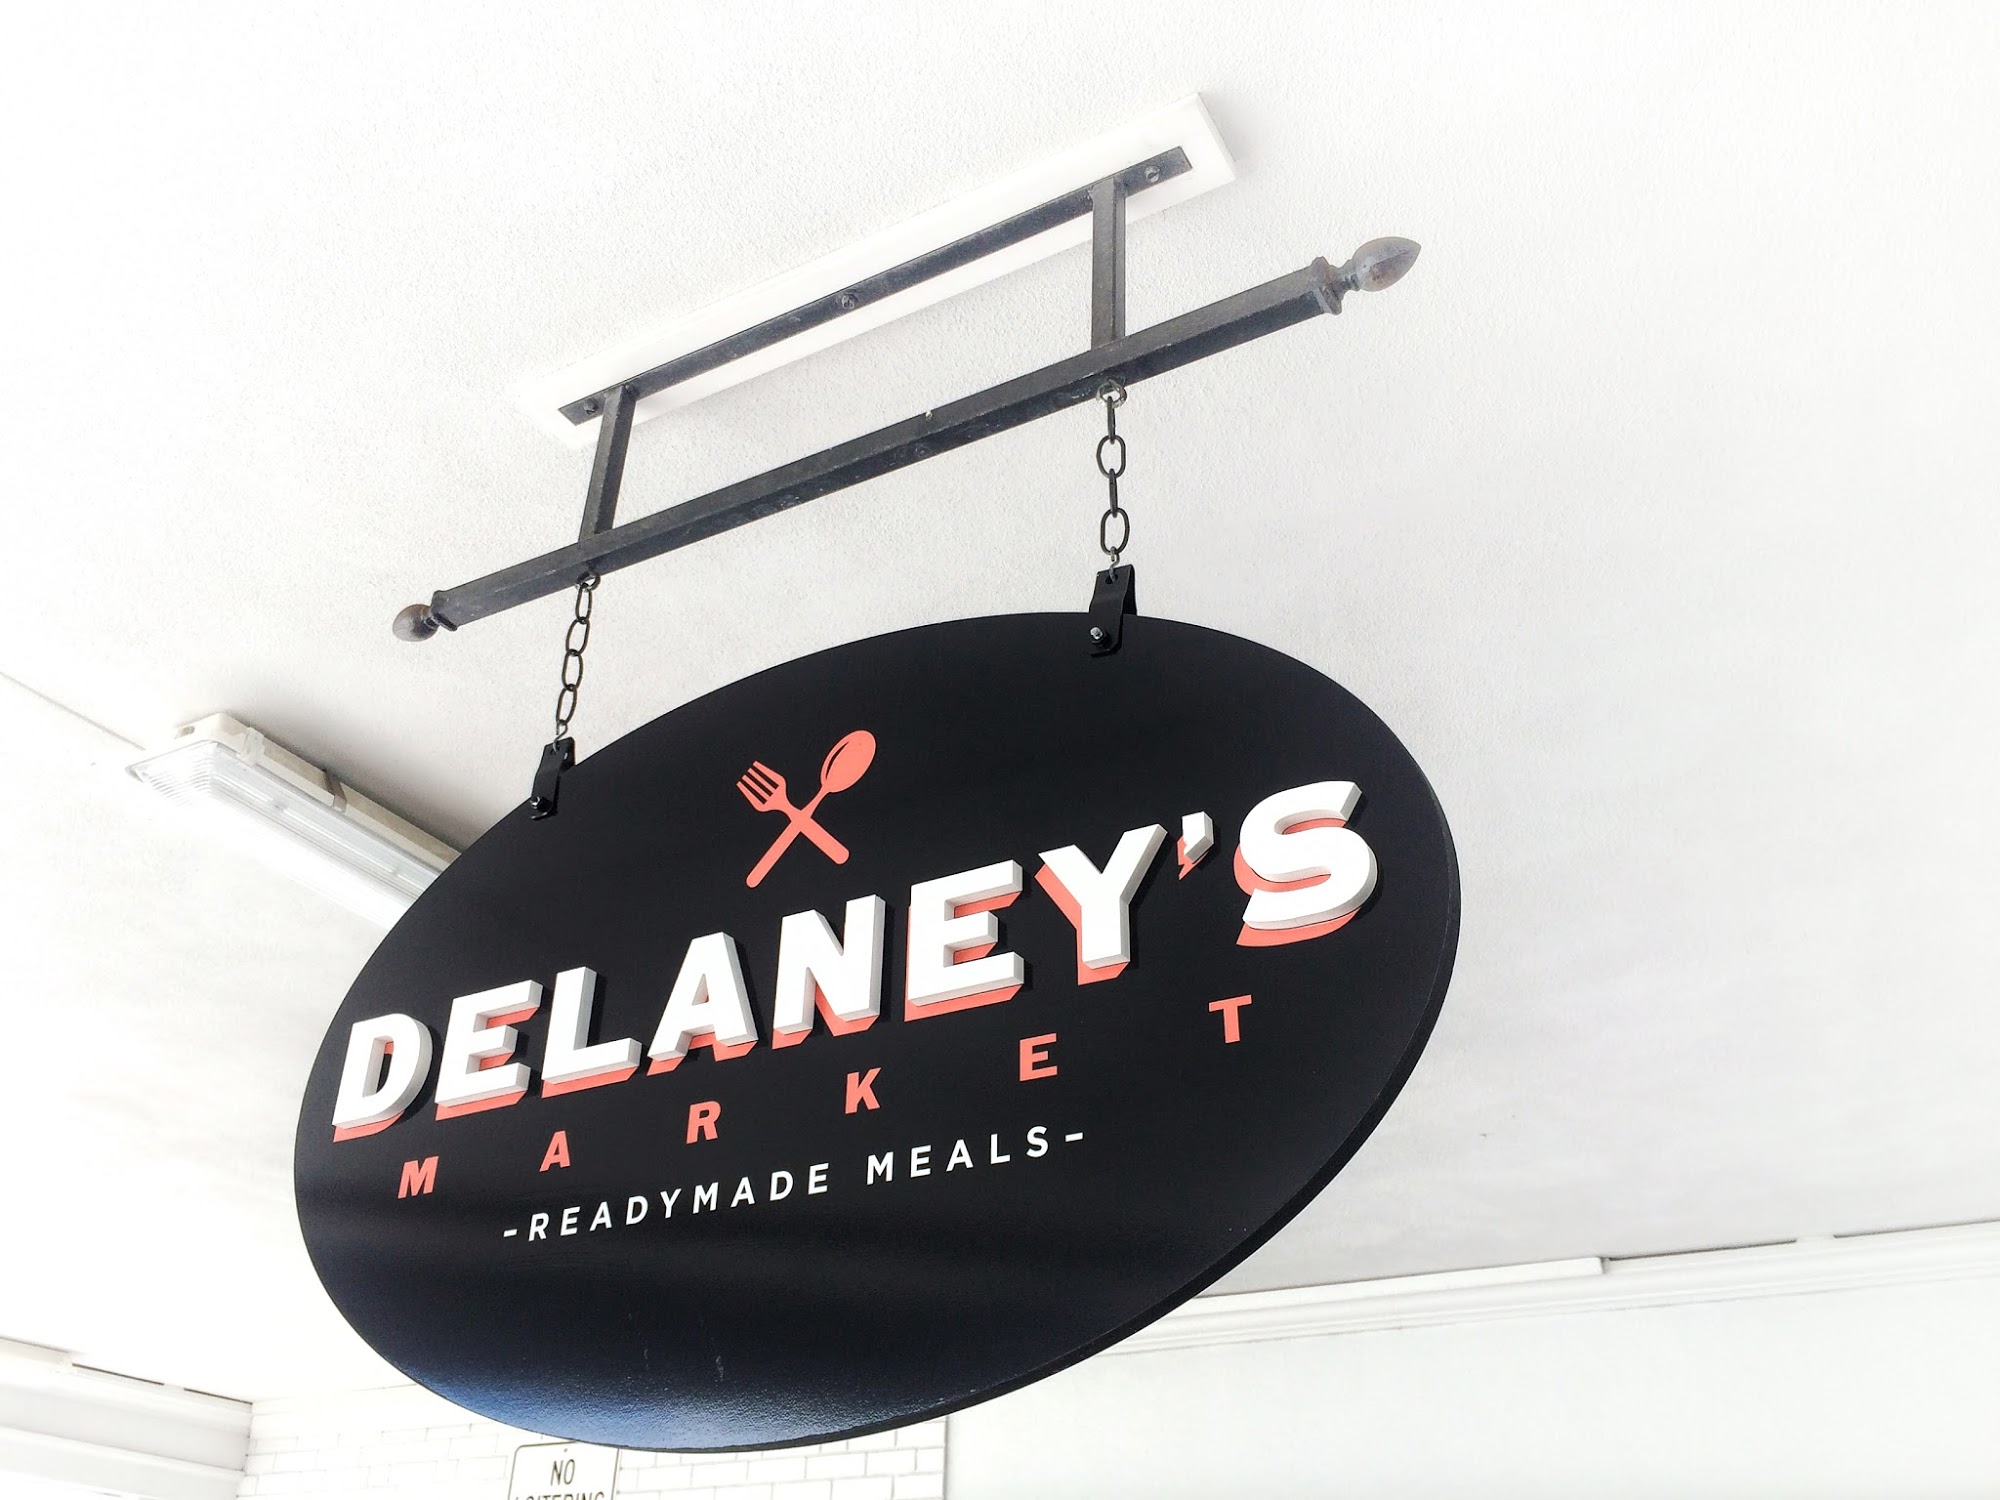 Delaney's Market